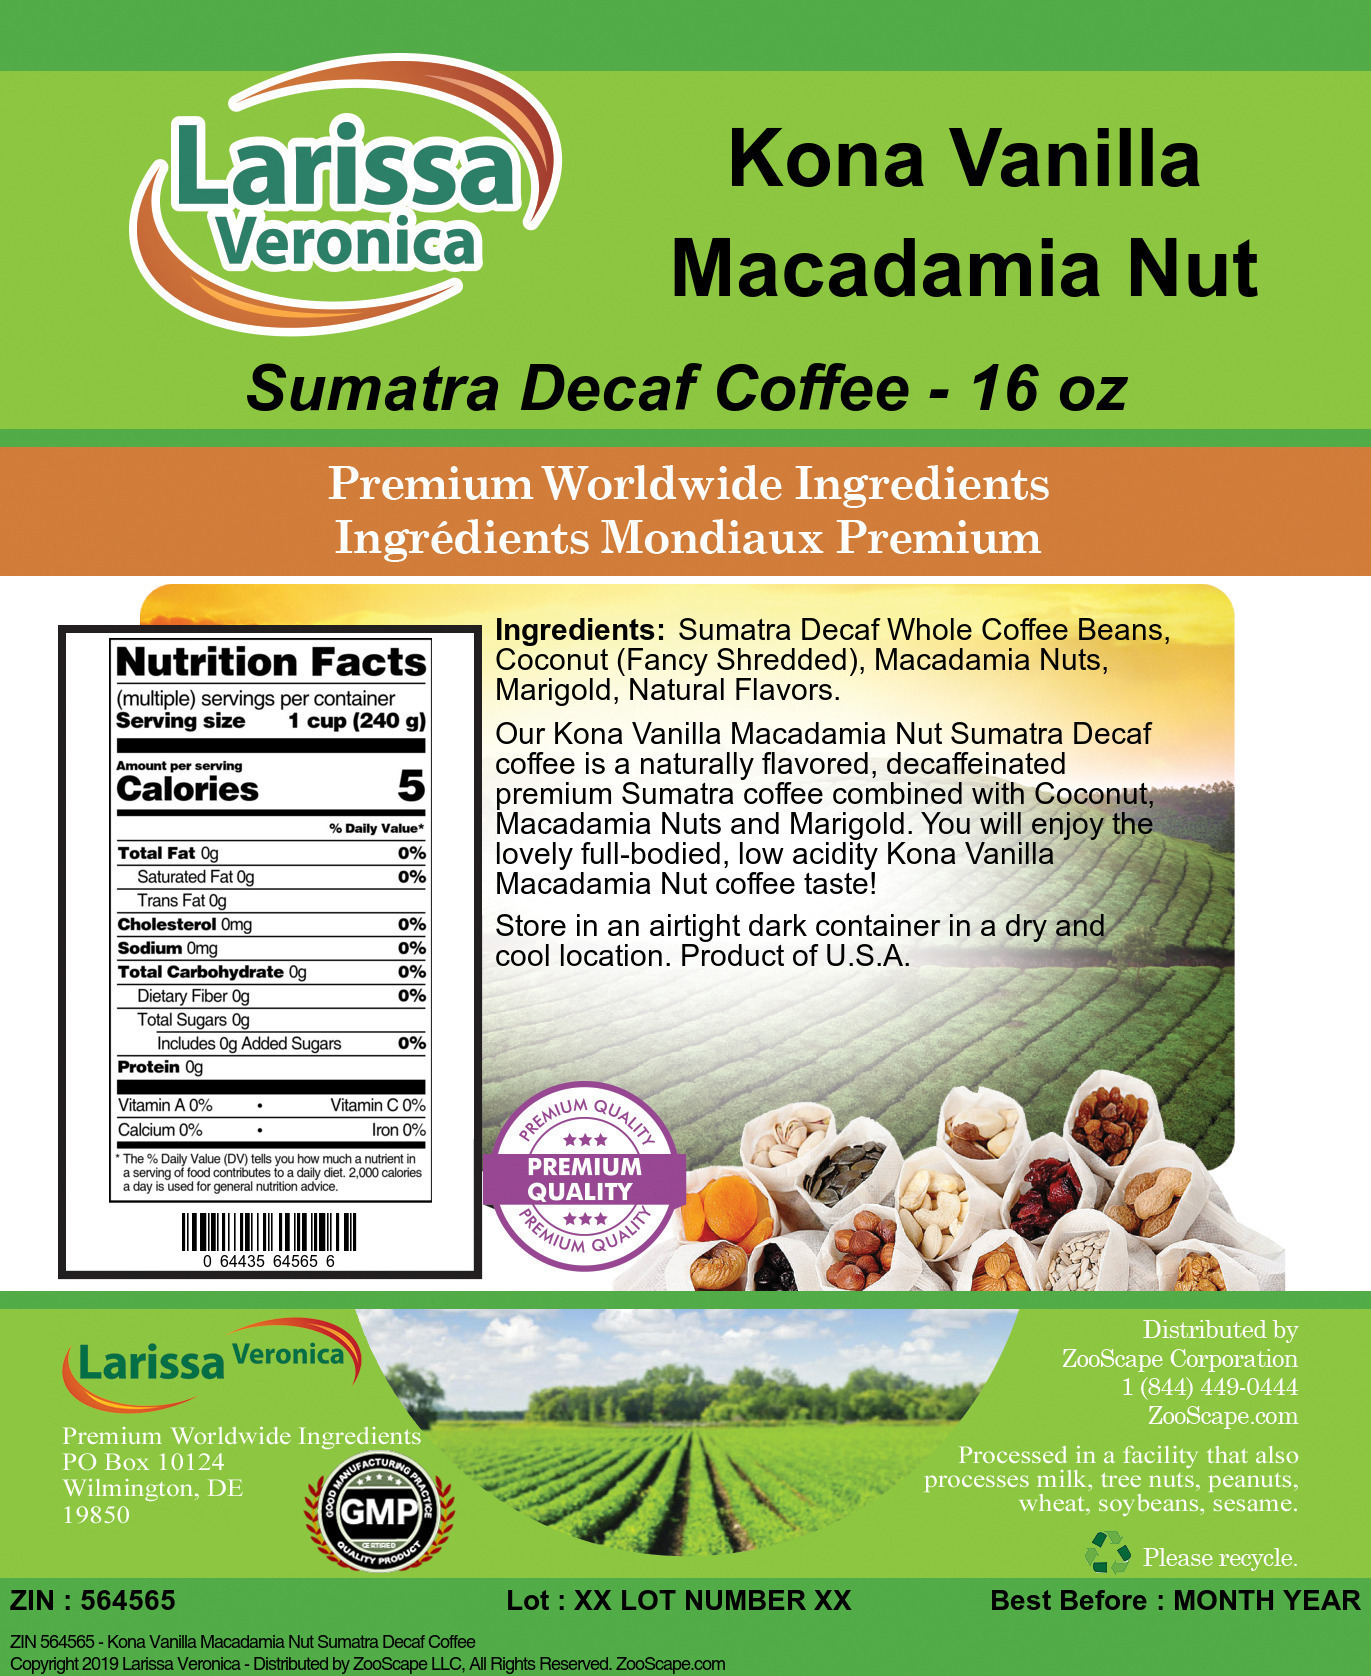 Kona Vanilla Macadamia Nut Sumatra Decaf Coffee - Label